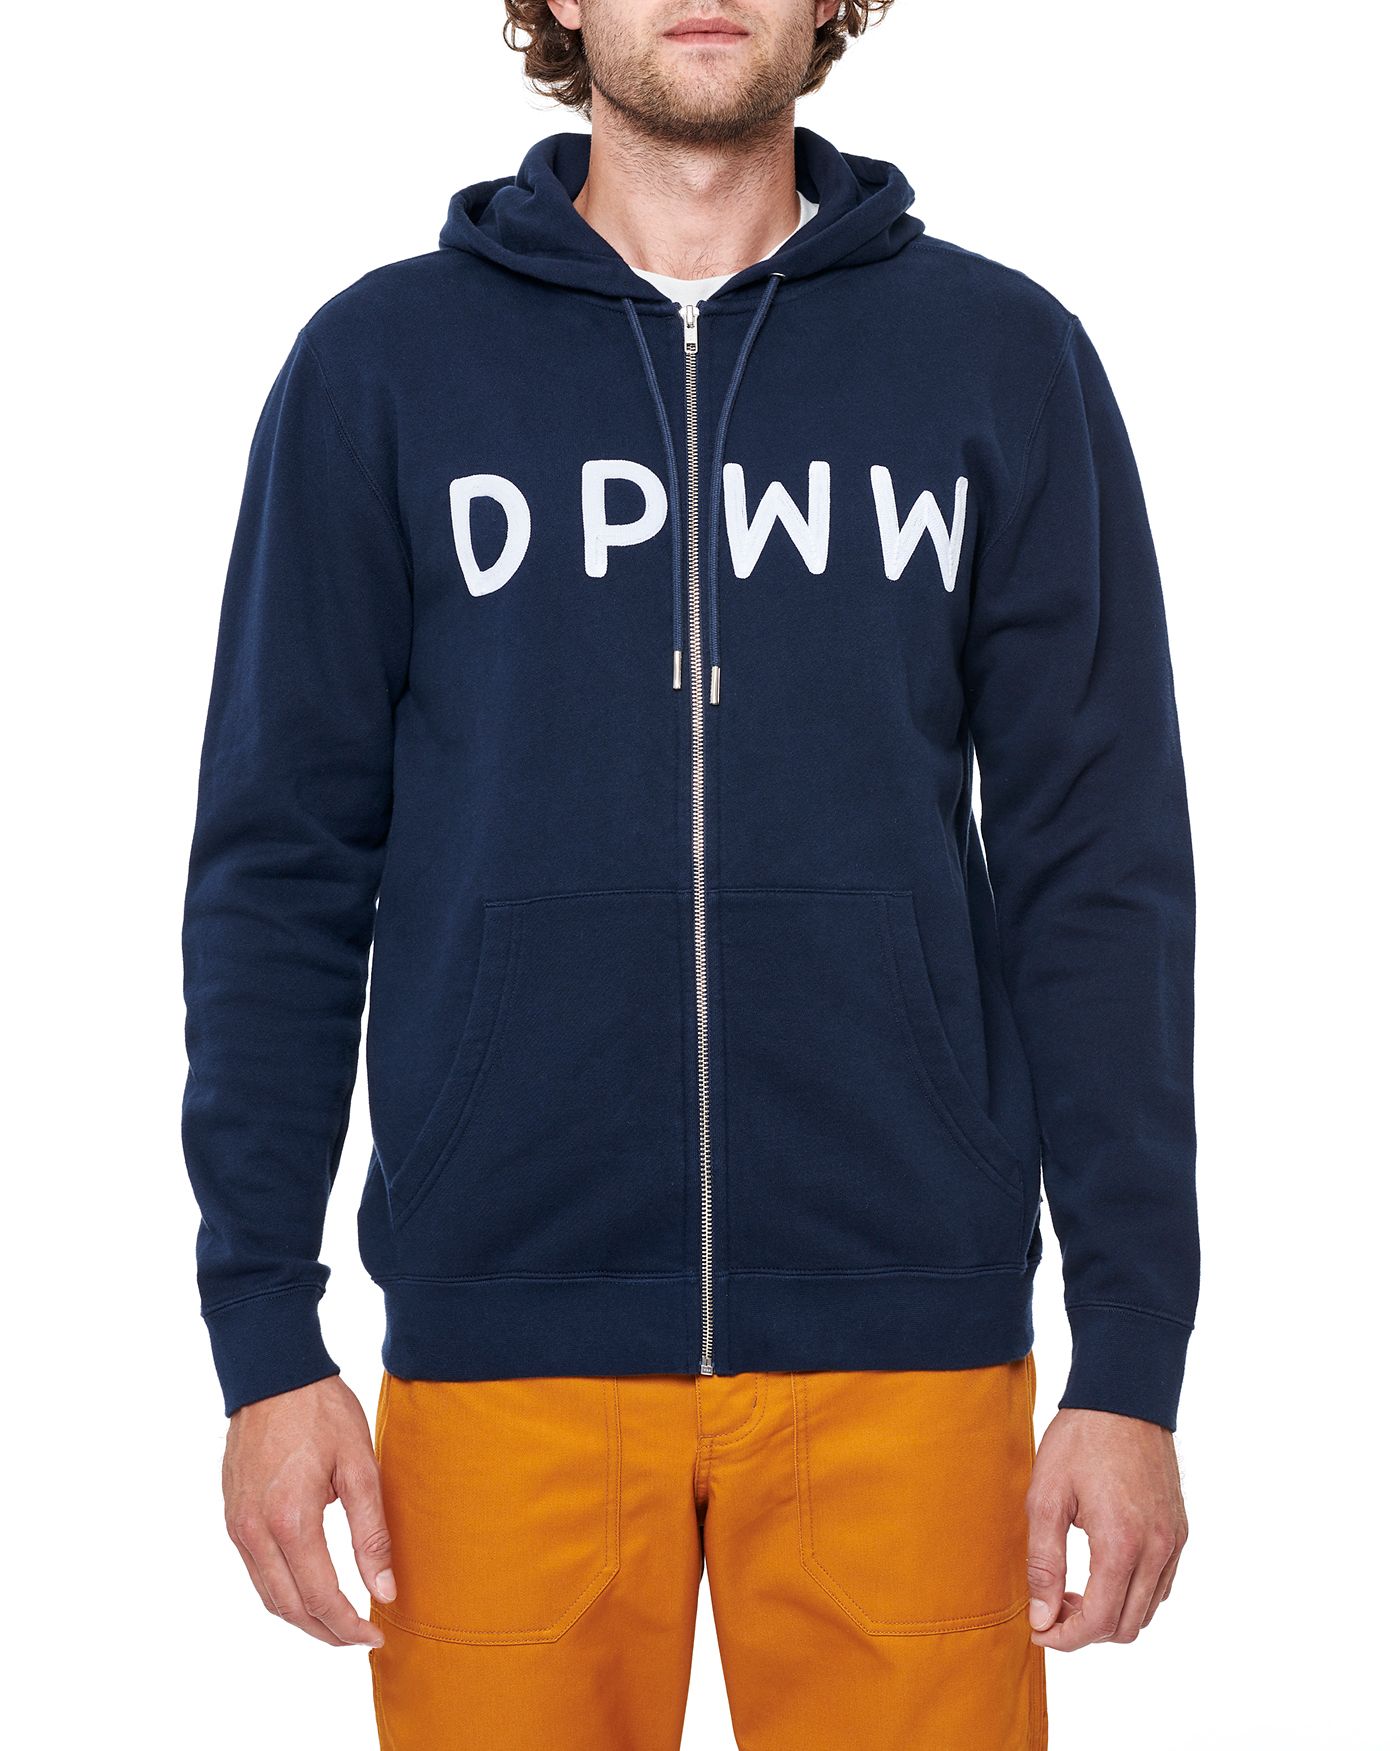 Photo of DPWW Zip Hooded Sweatshirt, Navy